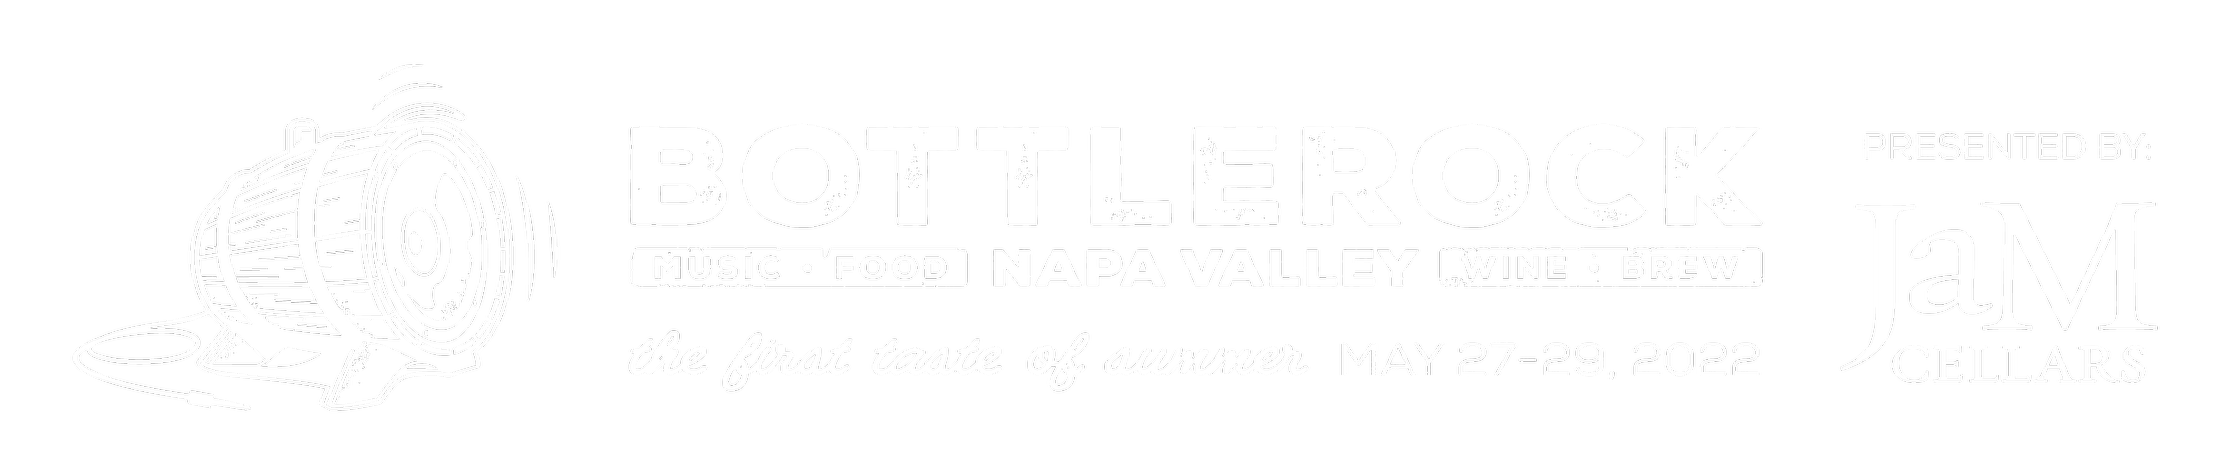 BottleRock Napa Valley - Presented by JaM Cellars